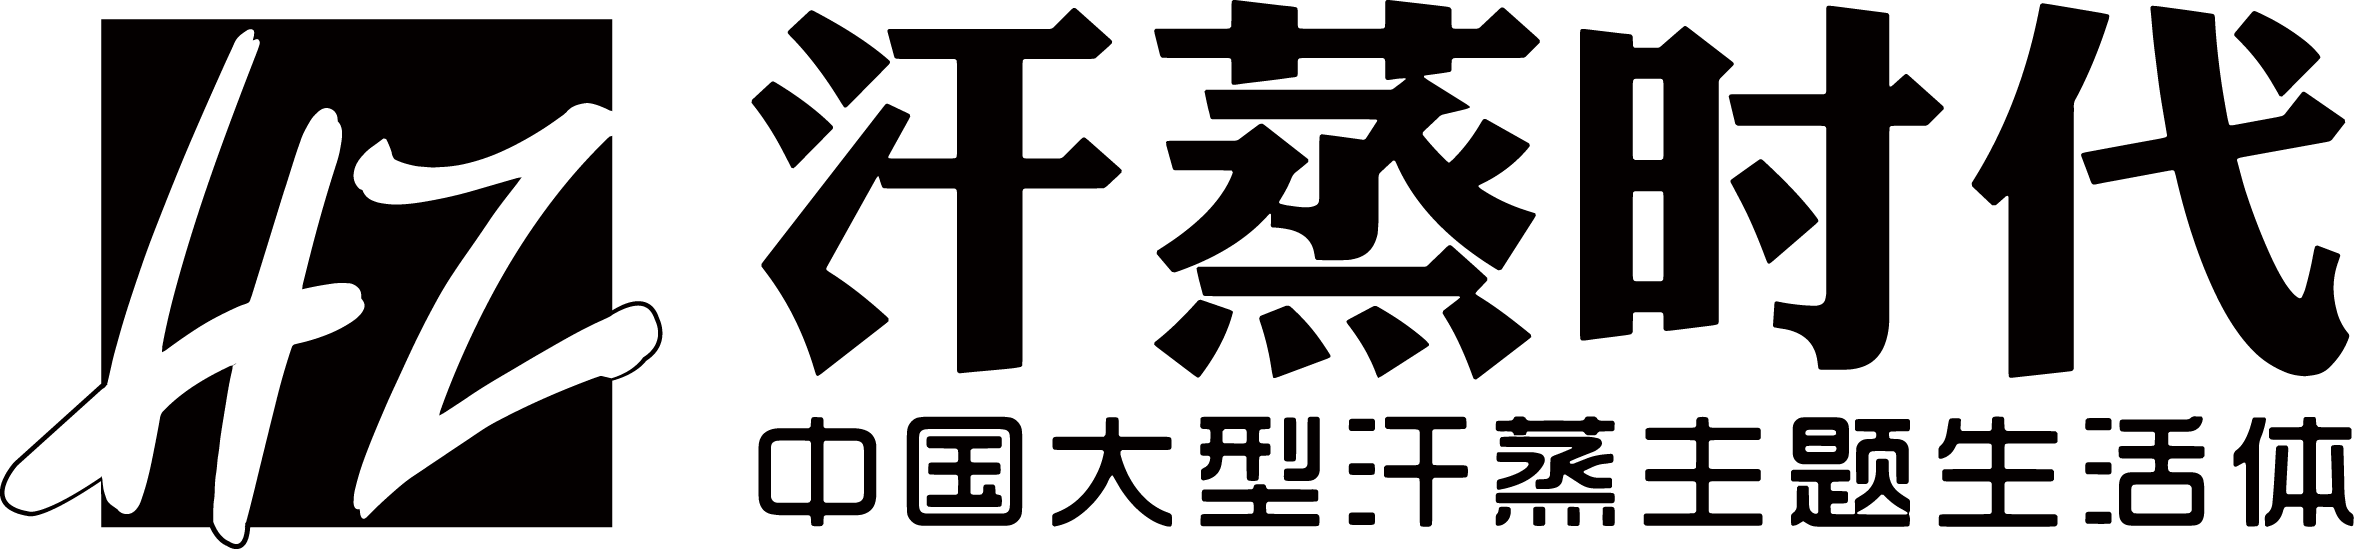 汗蒸激光logo.png